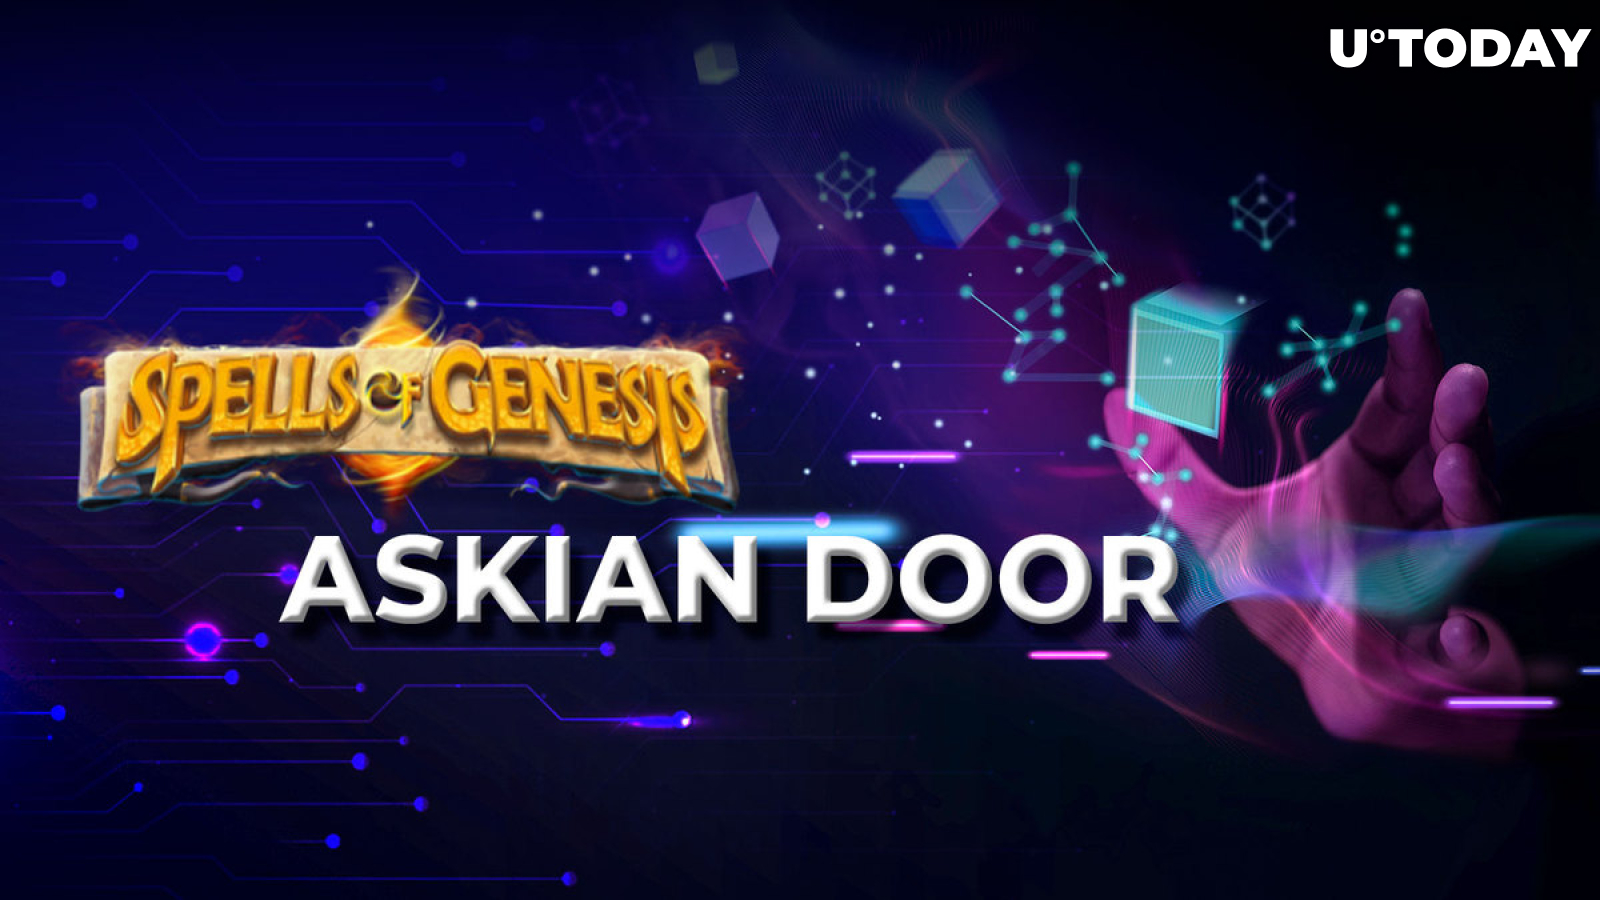 Spells of Genesis (SoG) Launches Askian Door Social Hub in Metaverse